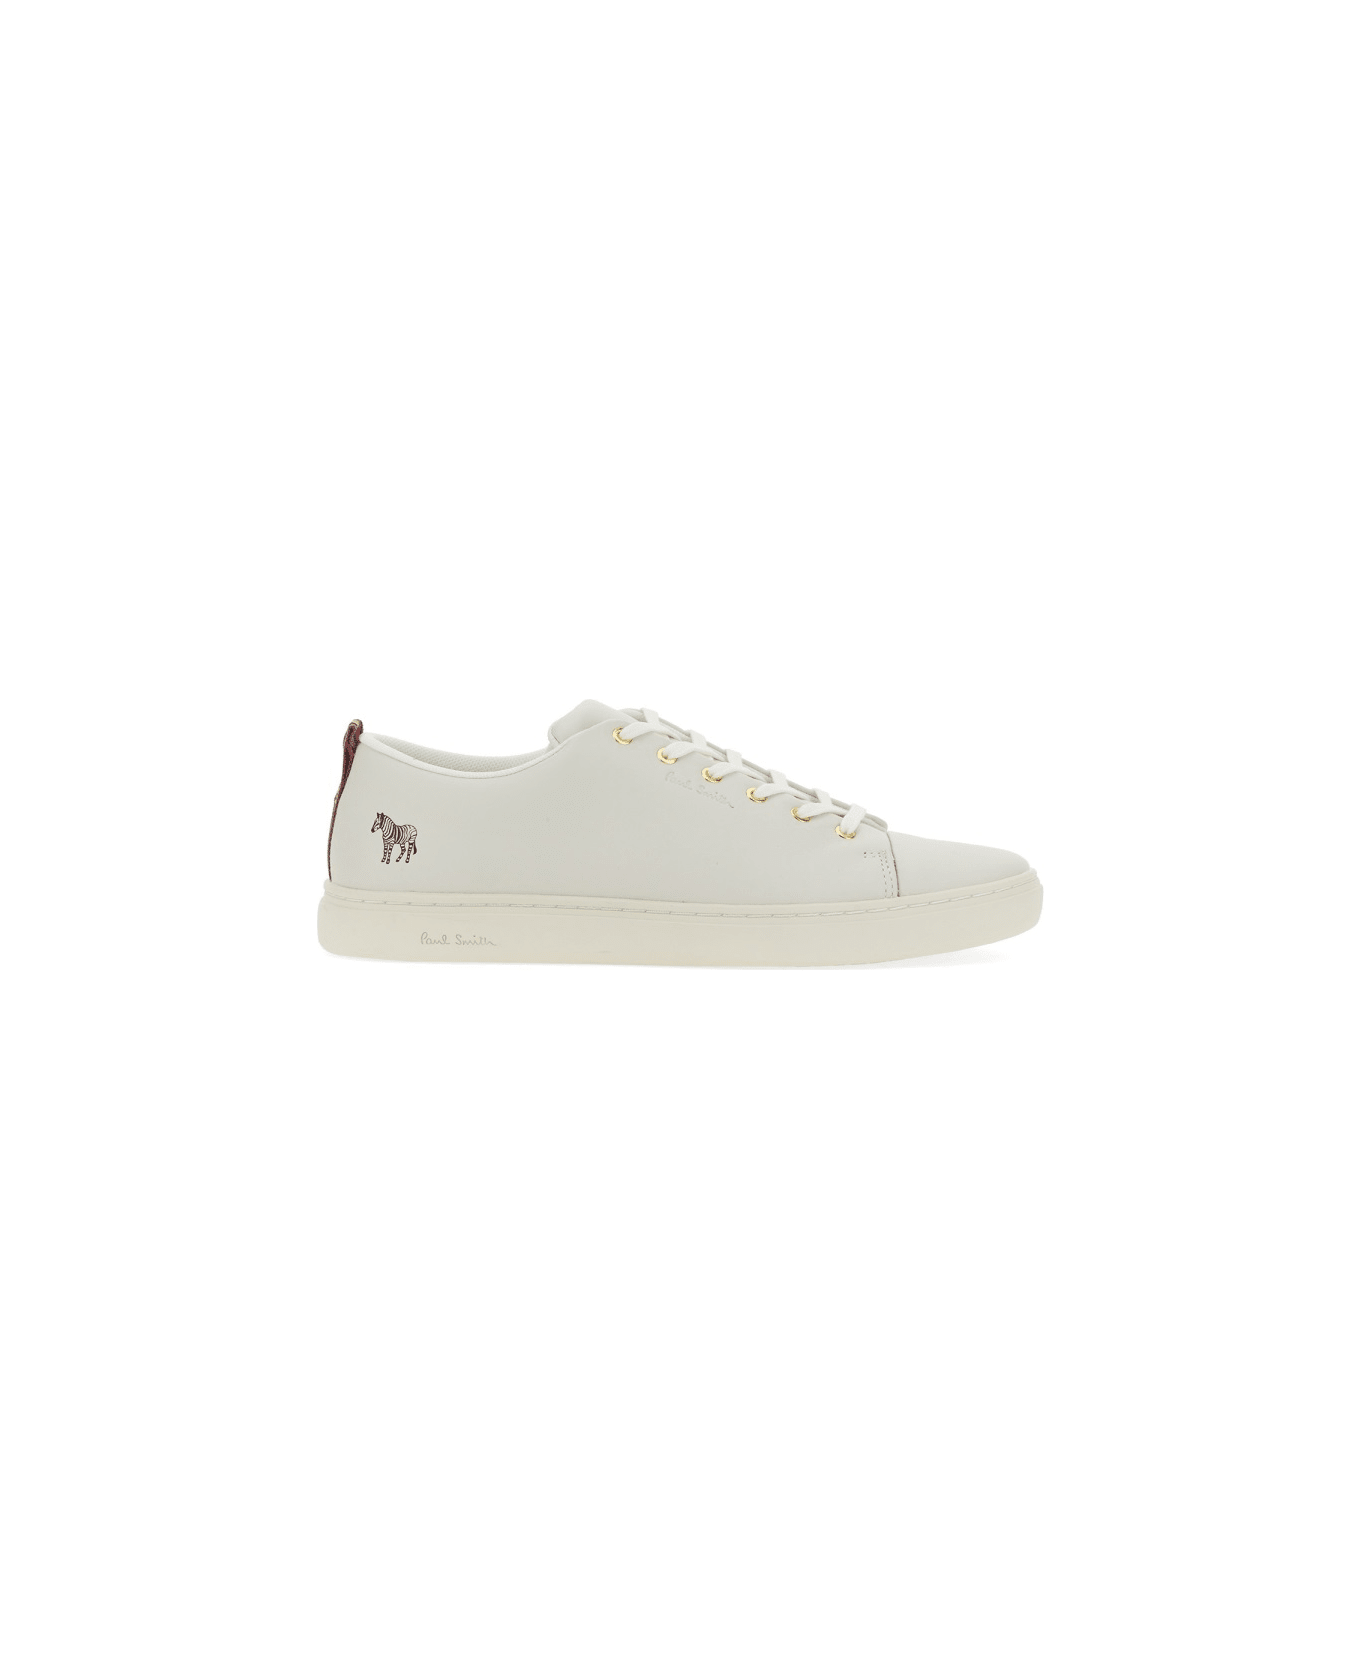 Paul Smith Sneaker "lee" - WHITE